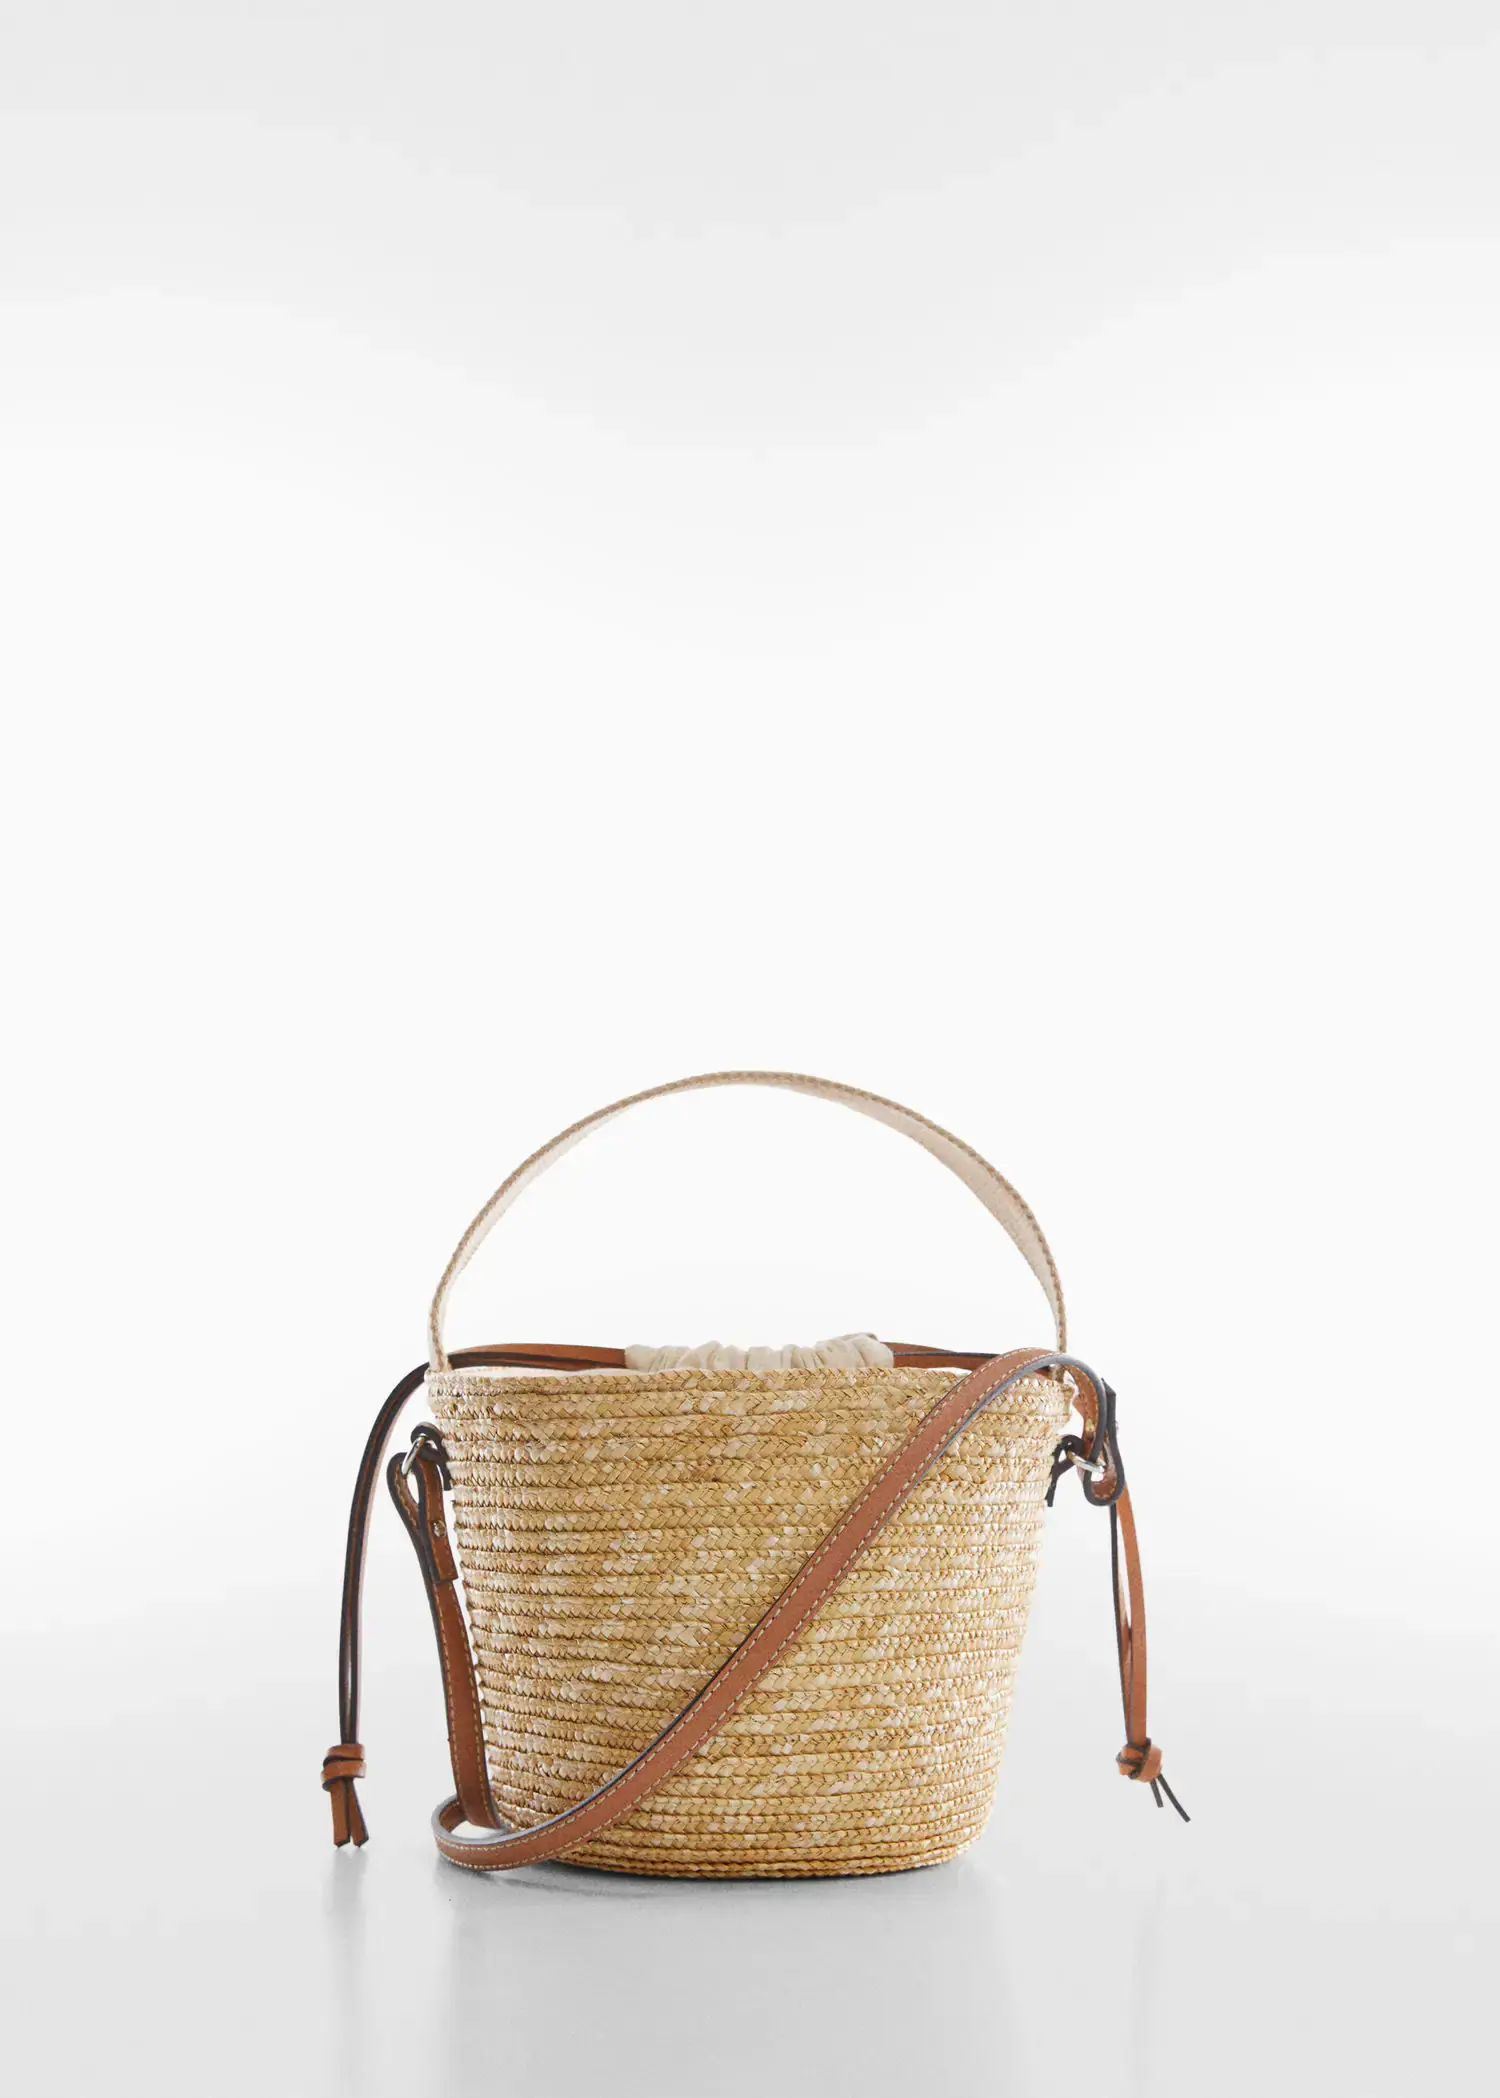 Mango Natural fiber sack bag. a close up of a straw bag on a white background 